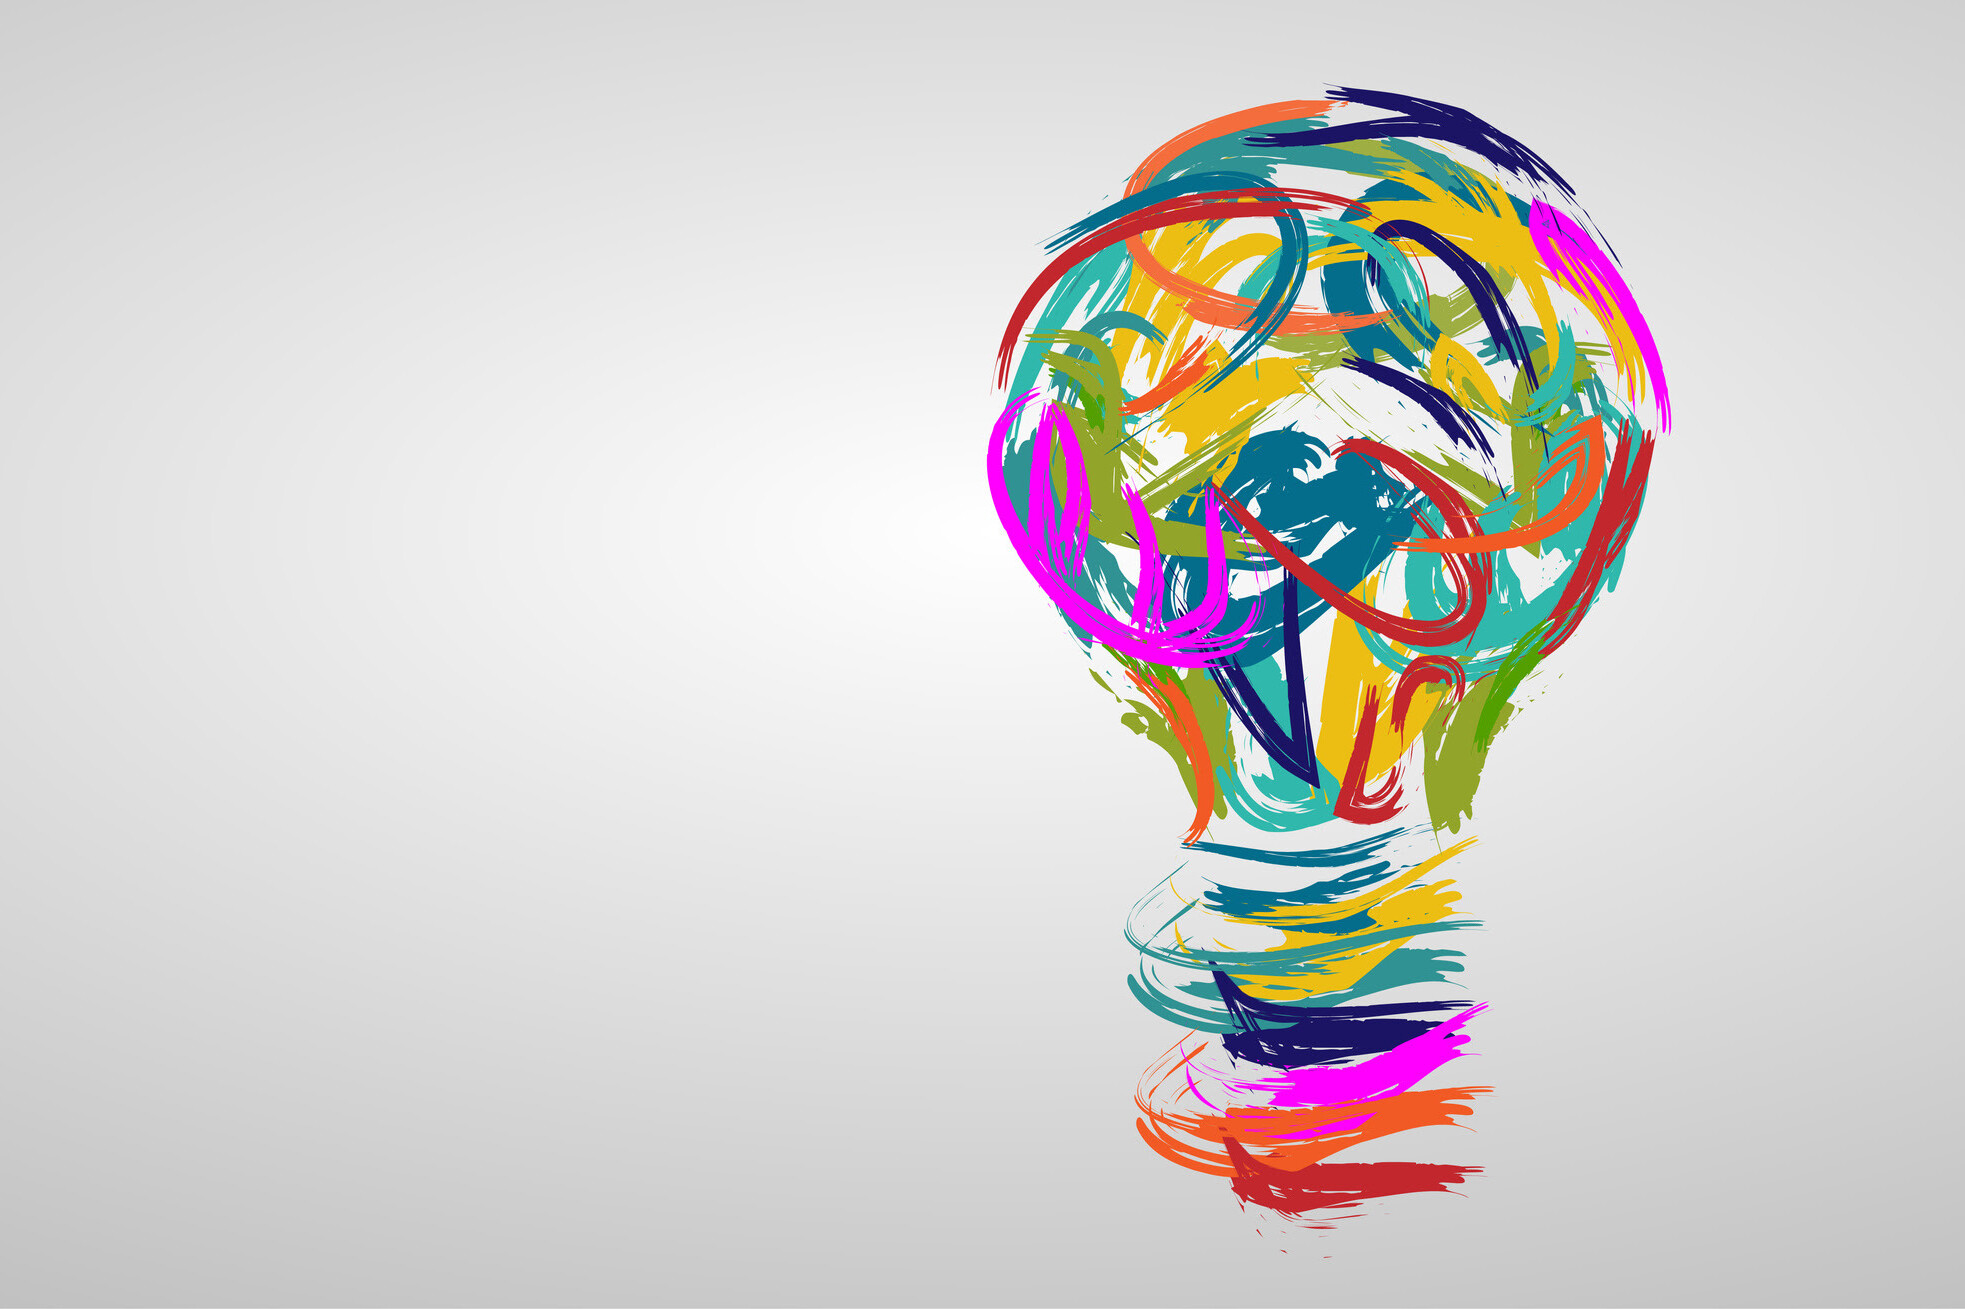 Multicolored paint strokes depict a lightbulb